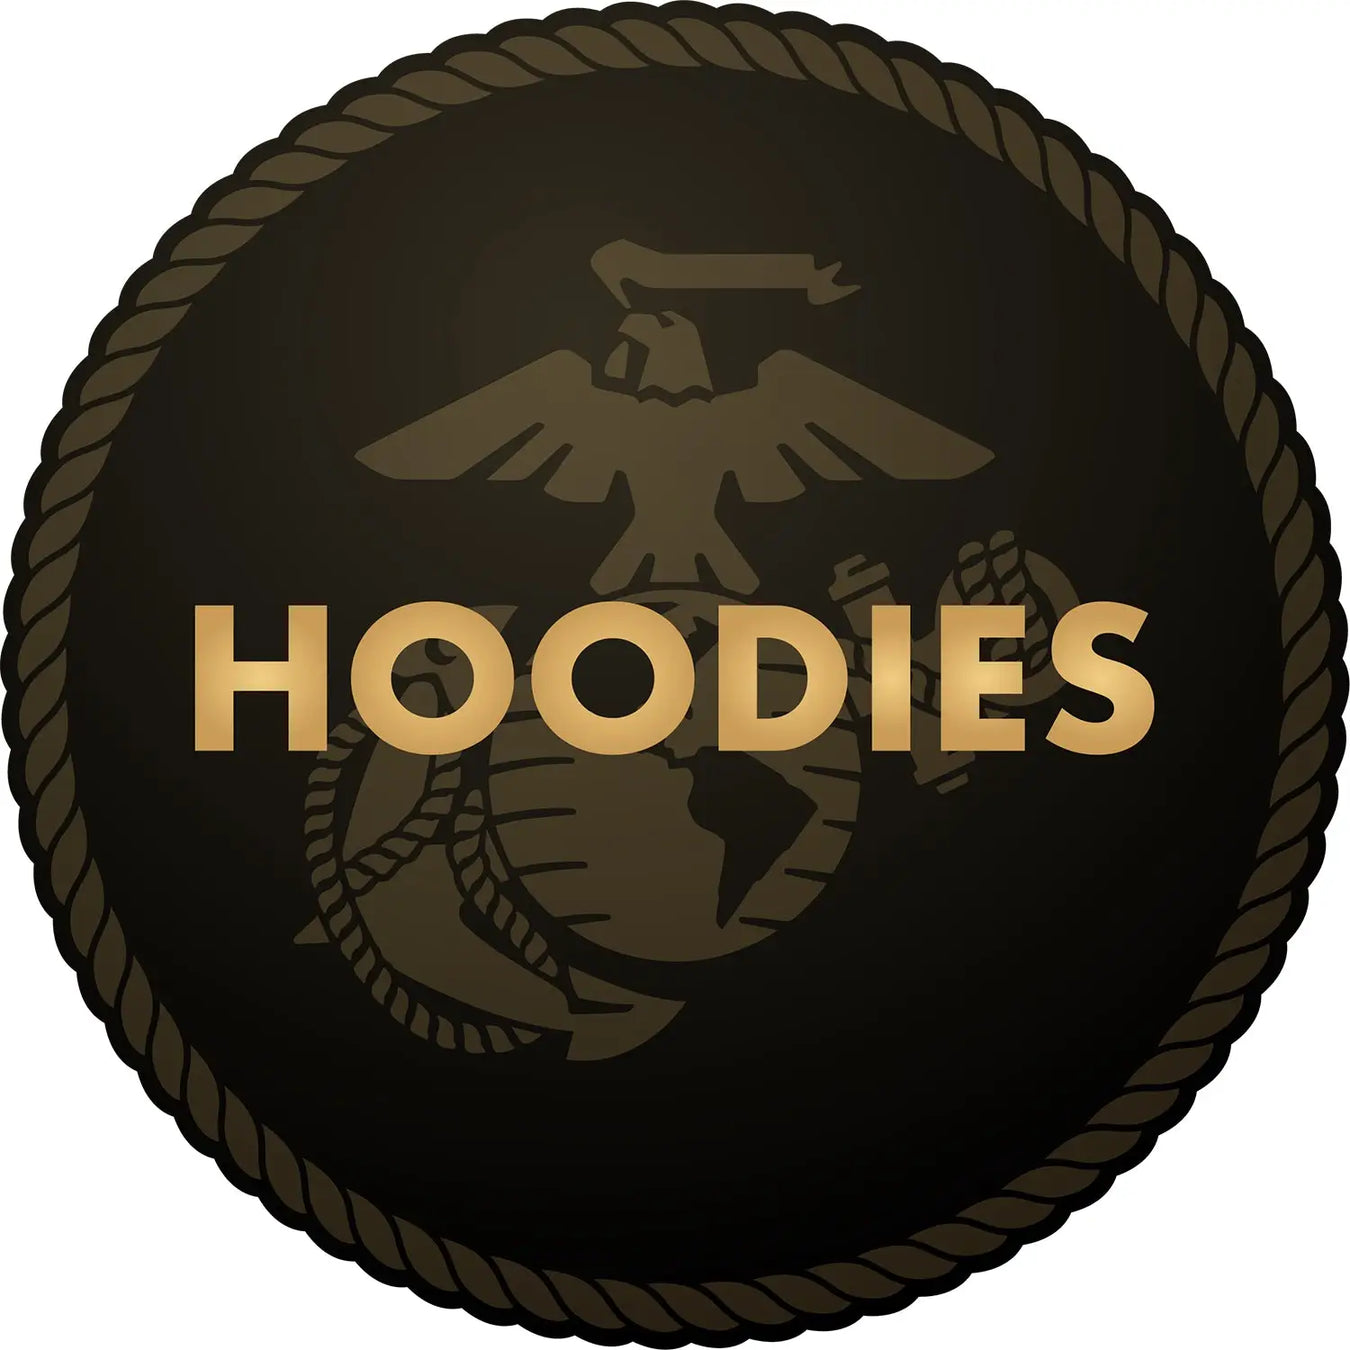 U.S. Marine Corps Hoodies